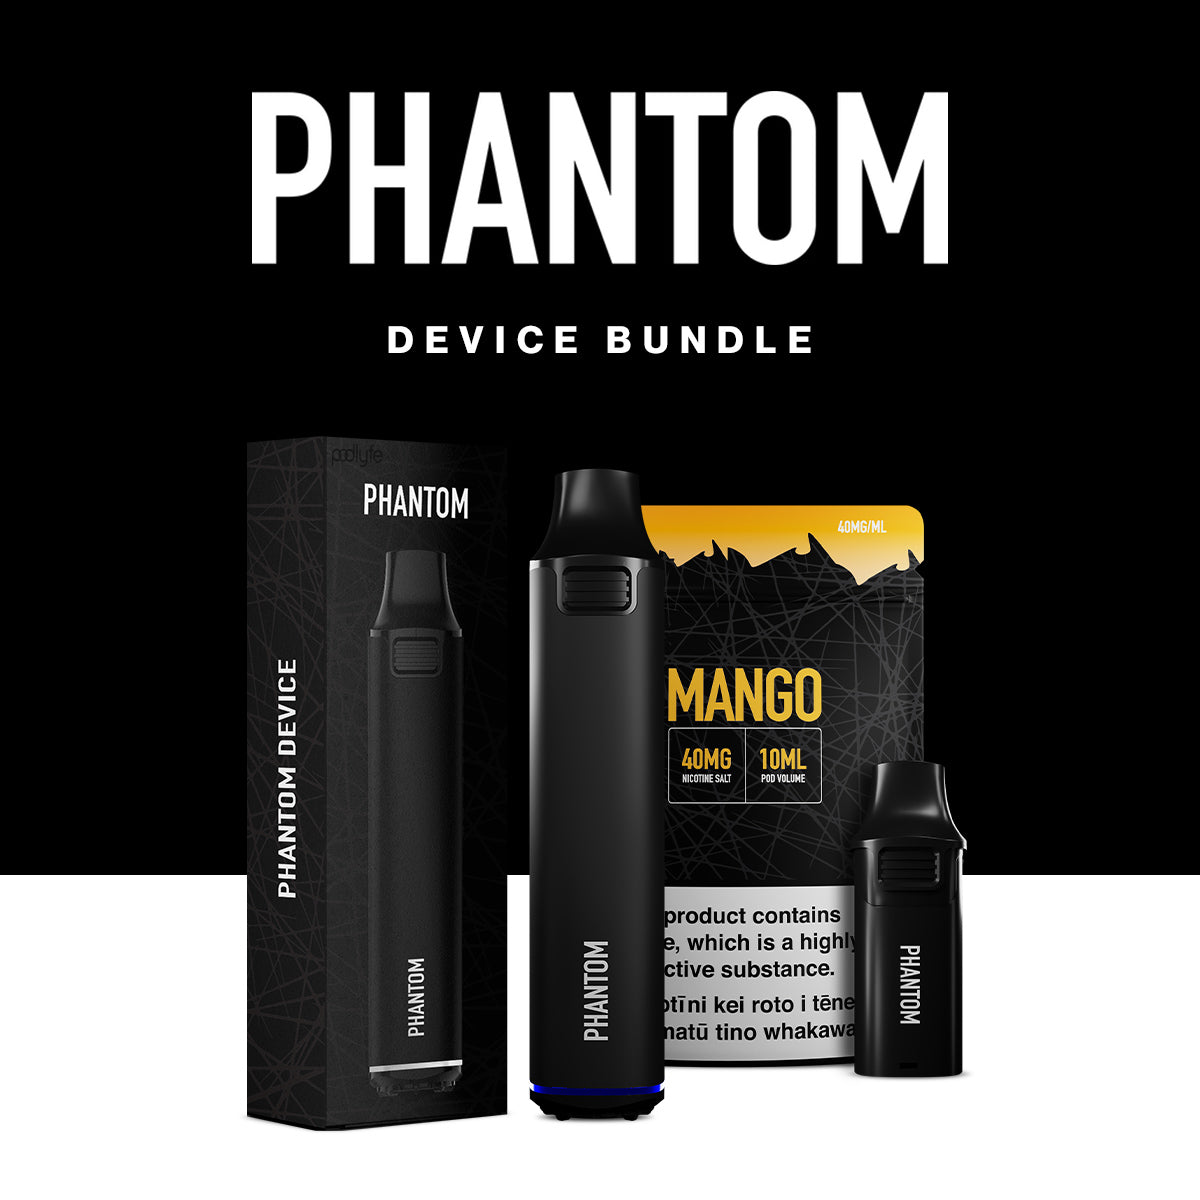 Phantom Device & Pods Bundle